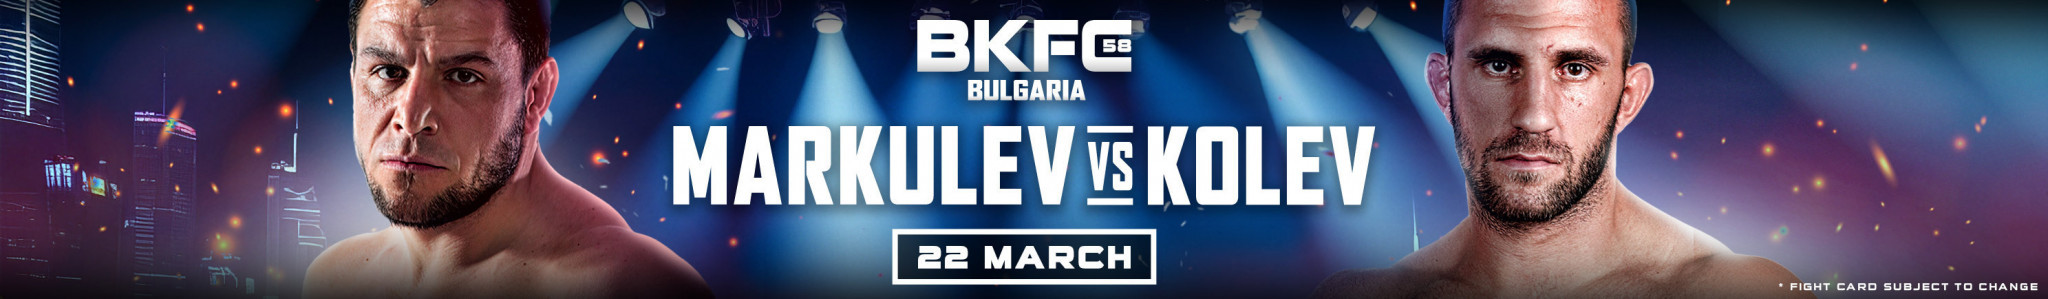 Markulev vs. Kolev, in Bulgaria on 22 March 22. BKFC